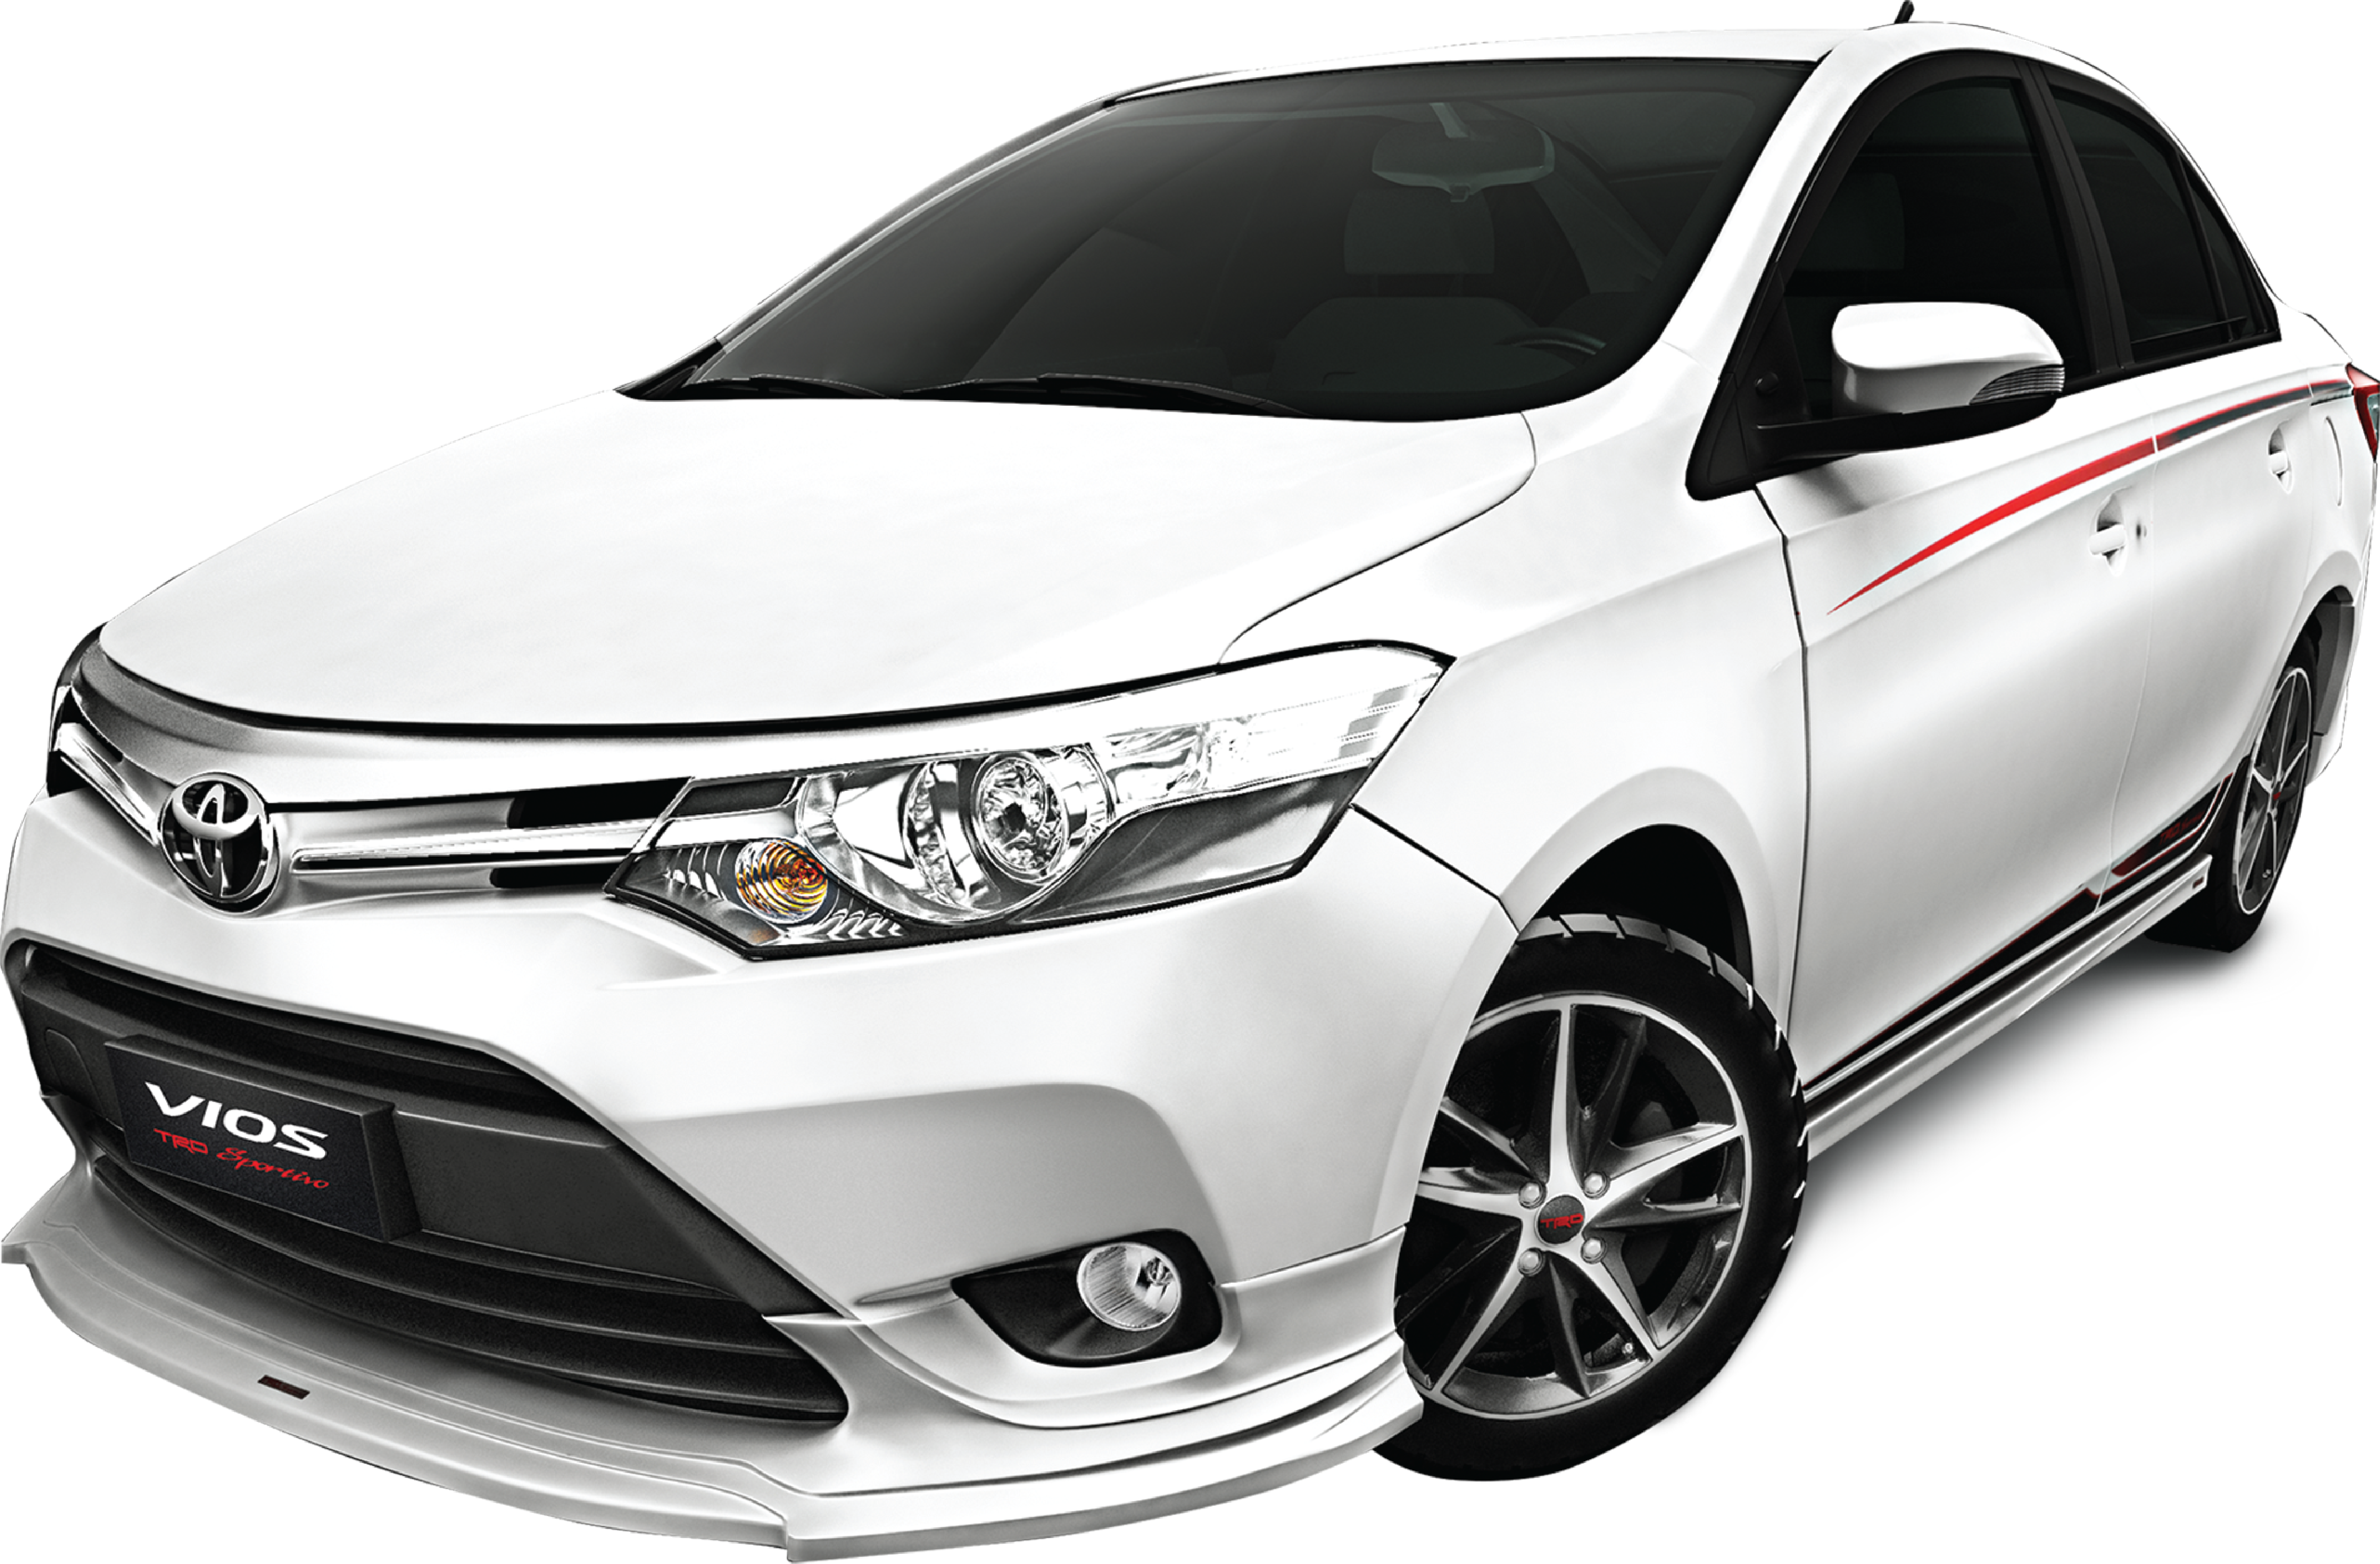 Toyota Vios 15e cvt 2017  mua bán xe Vios 15e cvt 2017 cũ giá rẻ 052023   Bonbanhcom